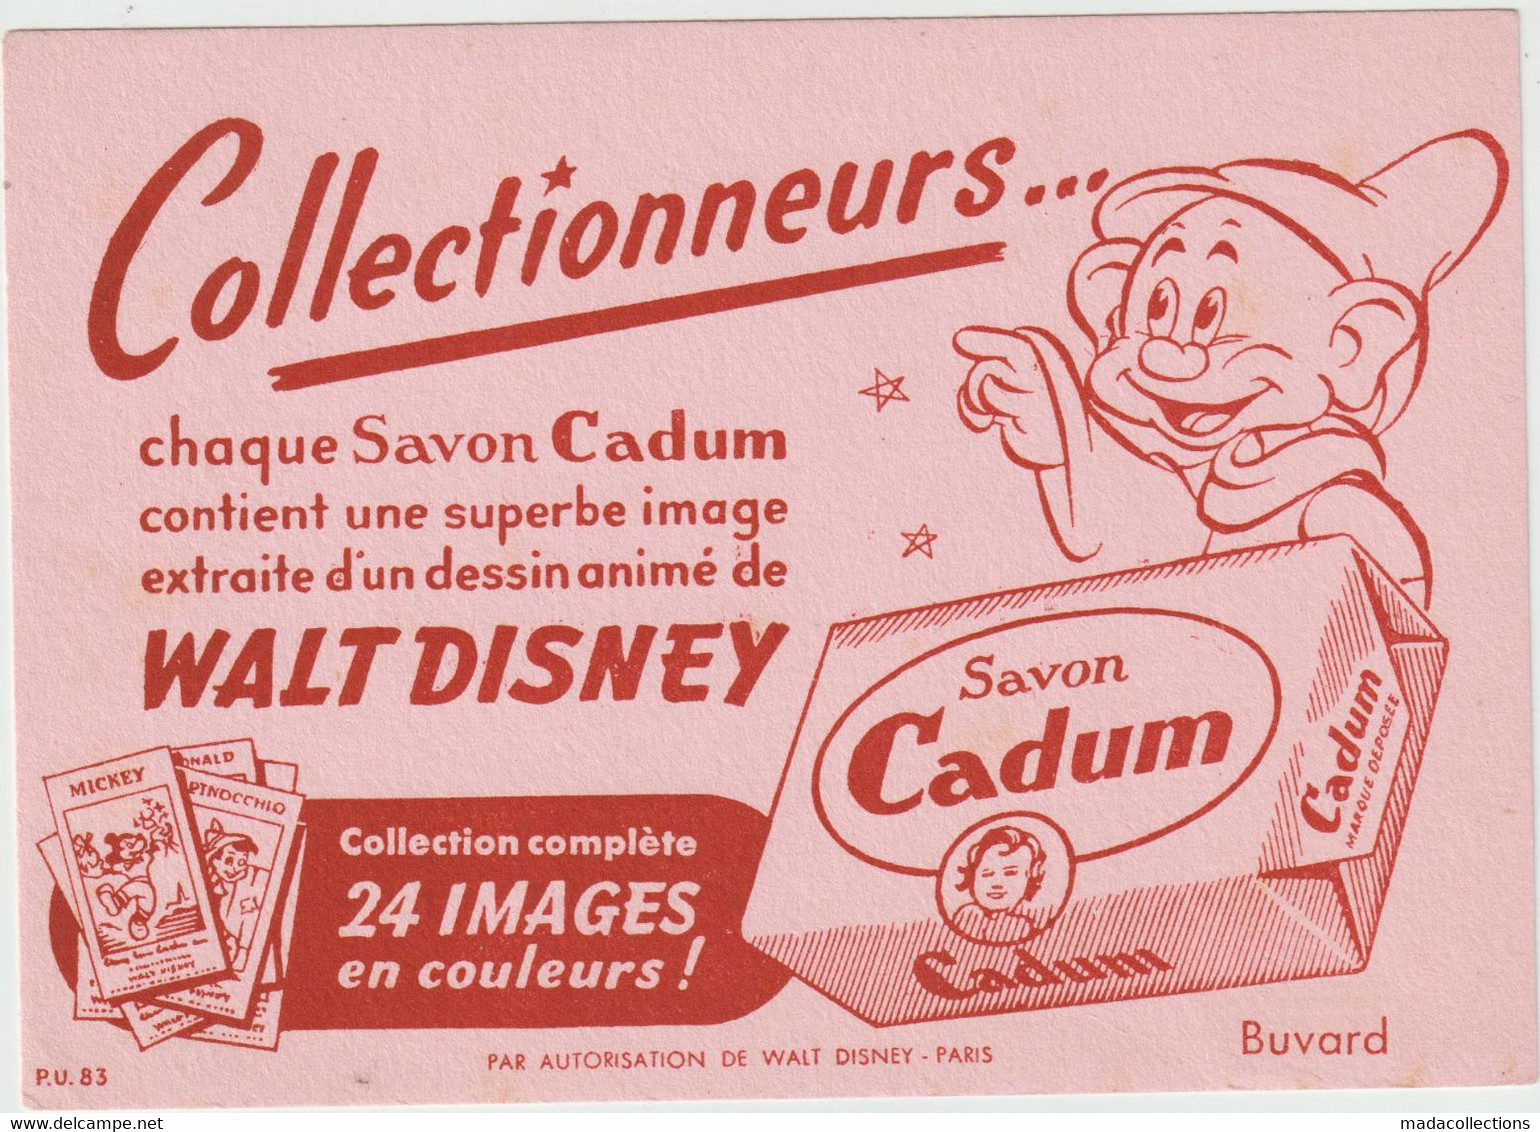 Buvard - Savon Cadum - Image Walt Disney - Perfume & Beauty